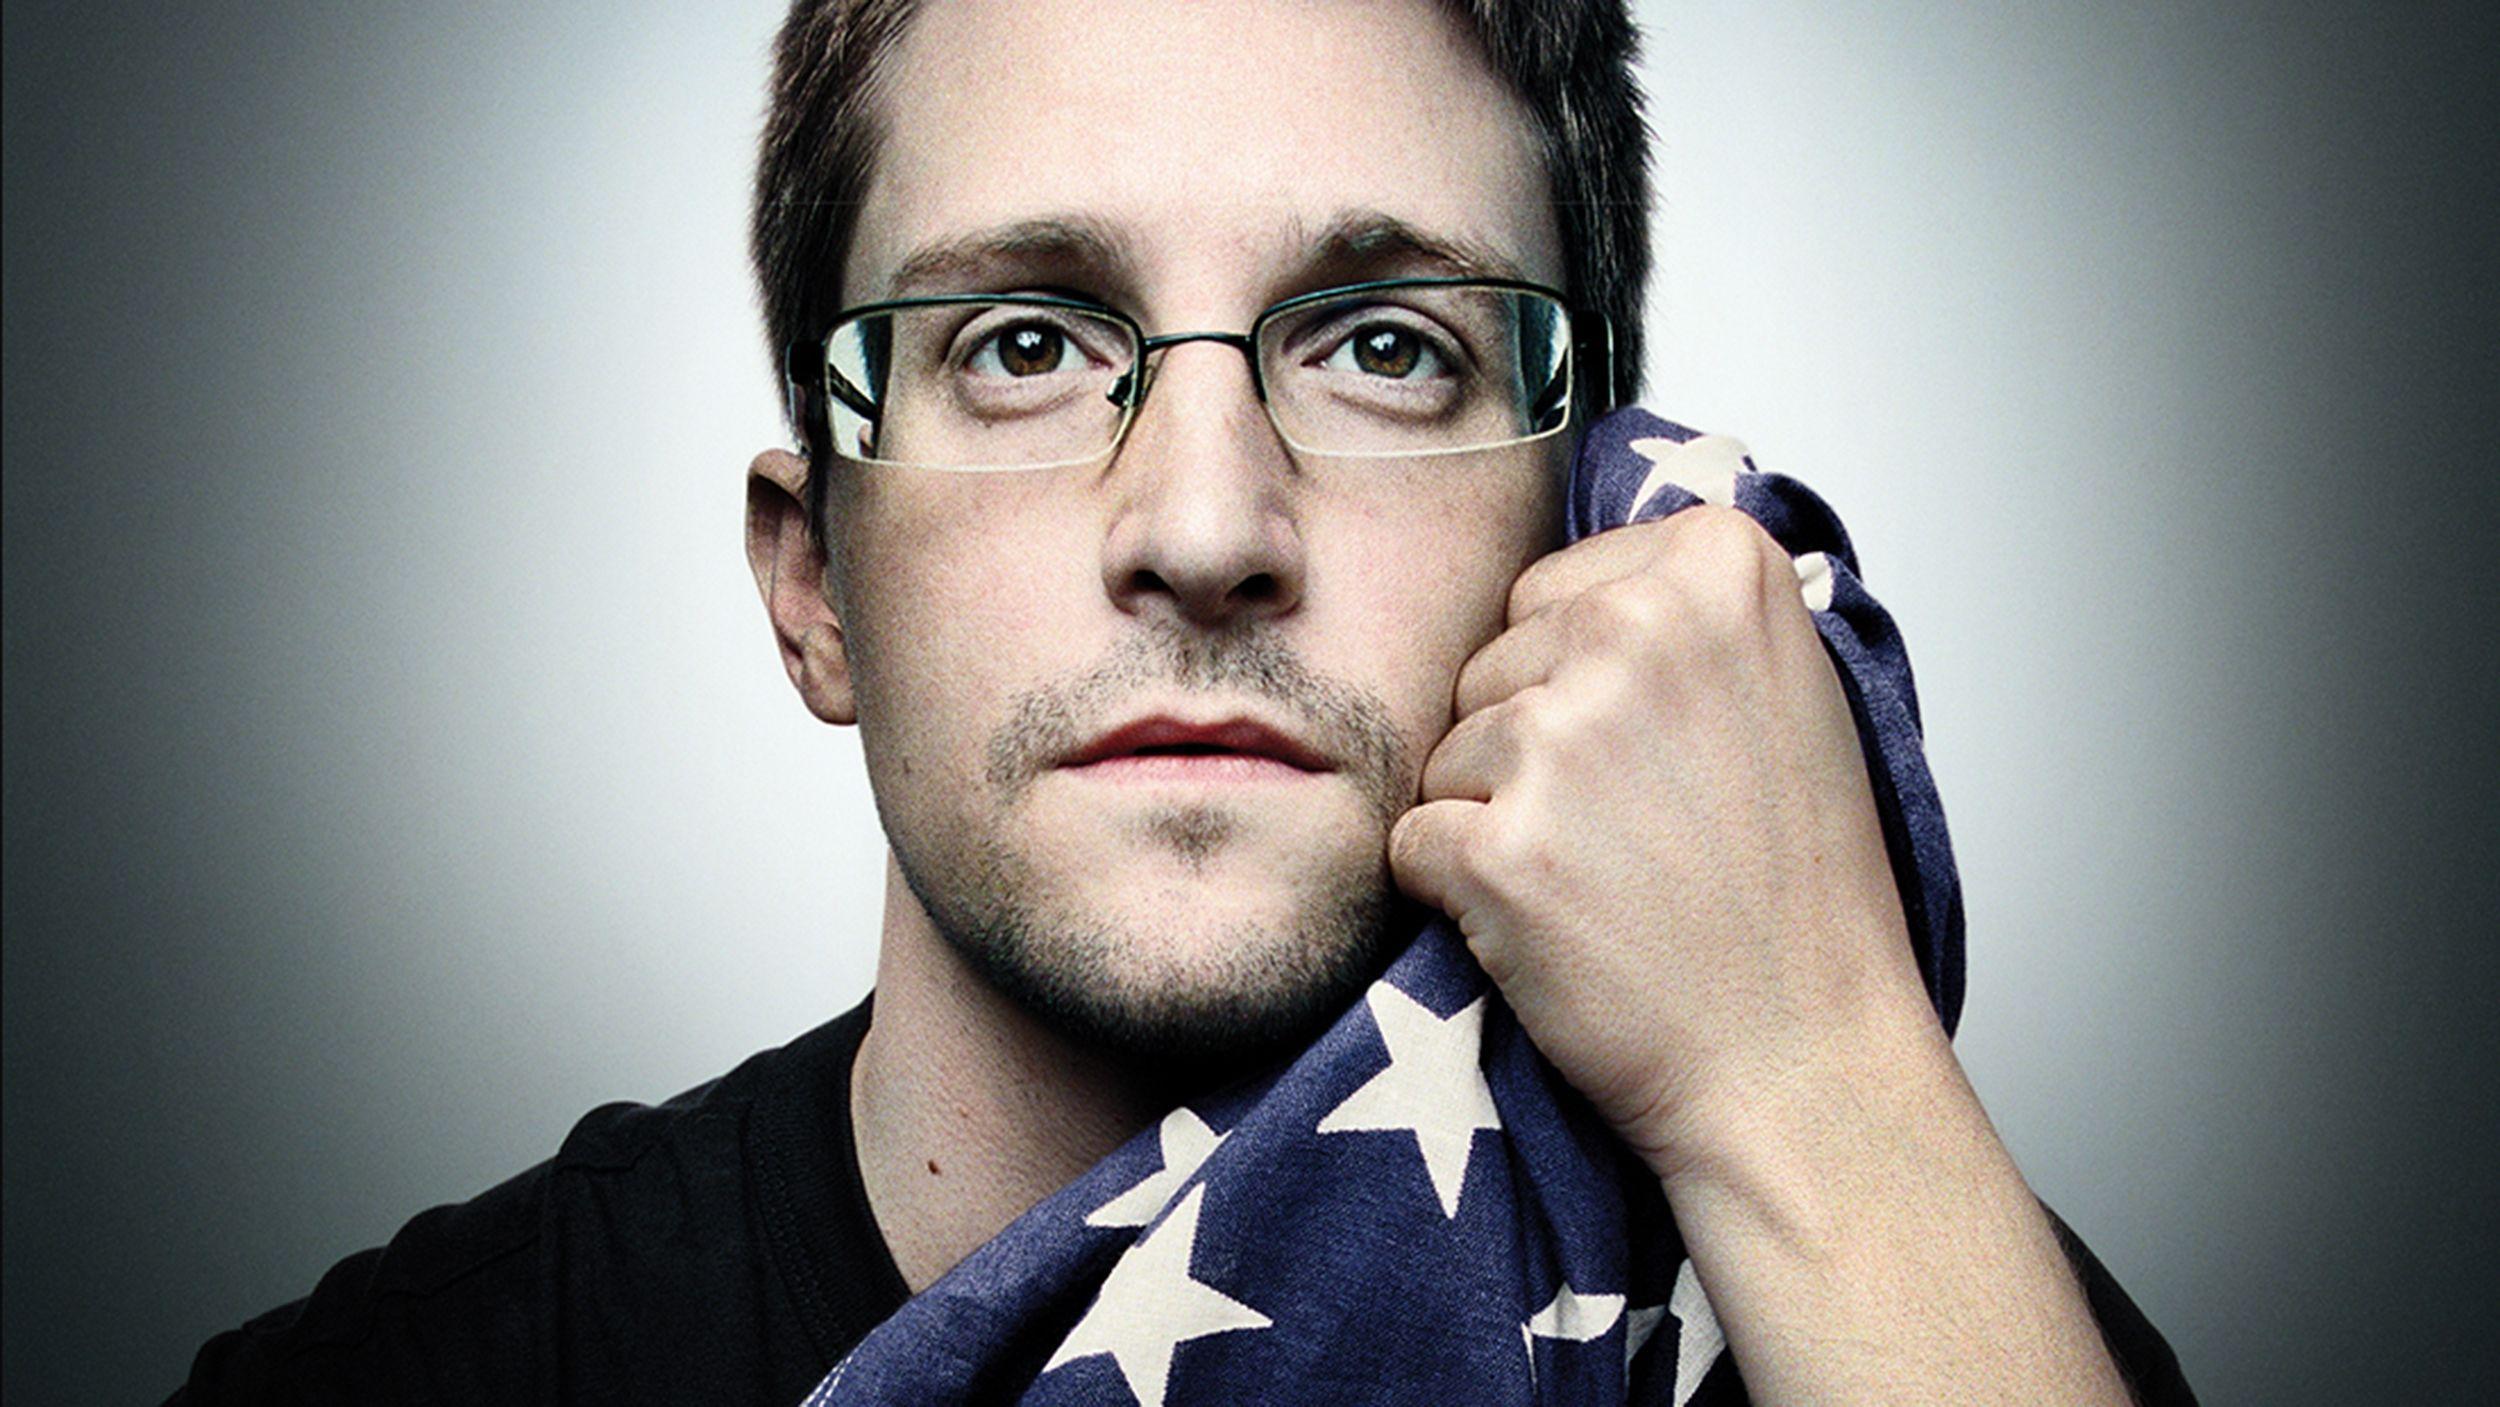 Edward Snowden Wallpaper Image Photo Picture Background